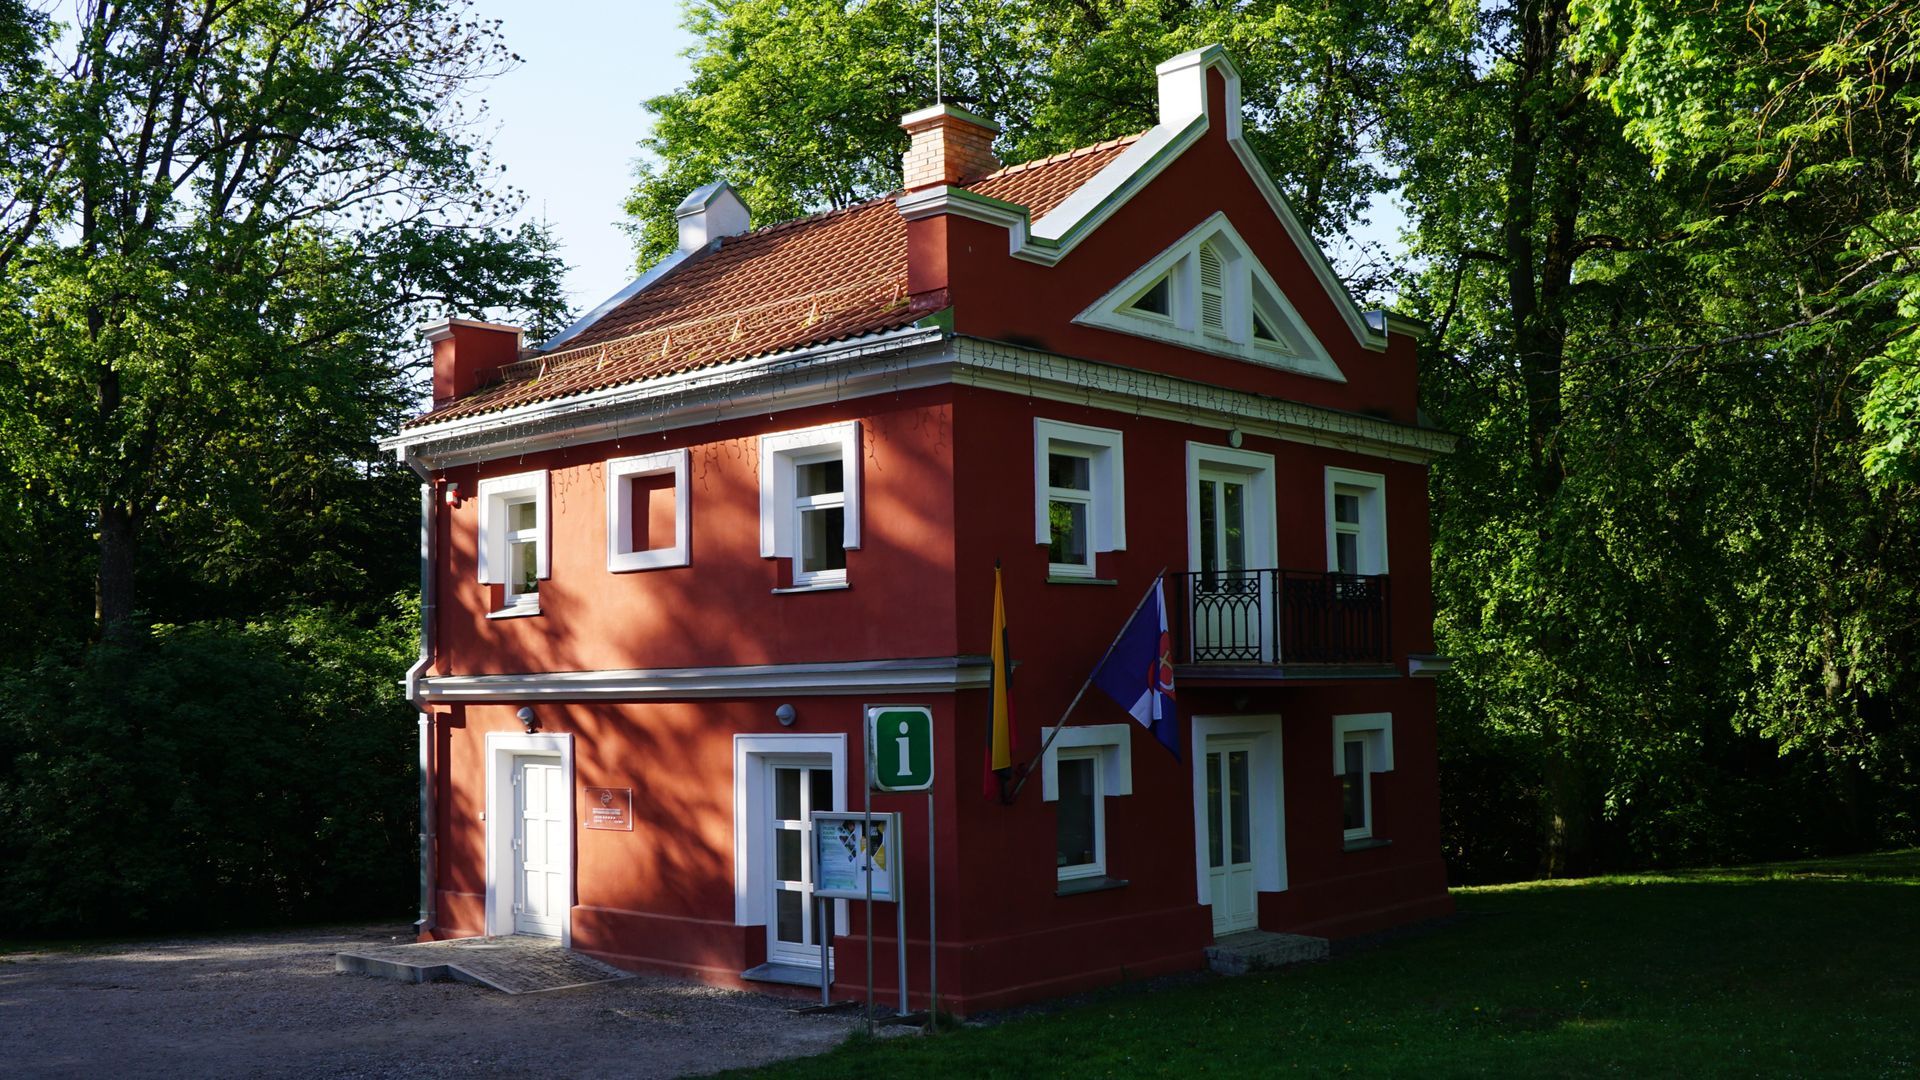 Kaunas Region Tourism and Business Information Center